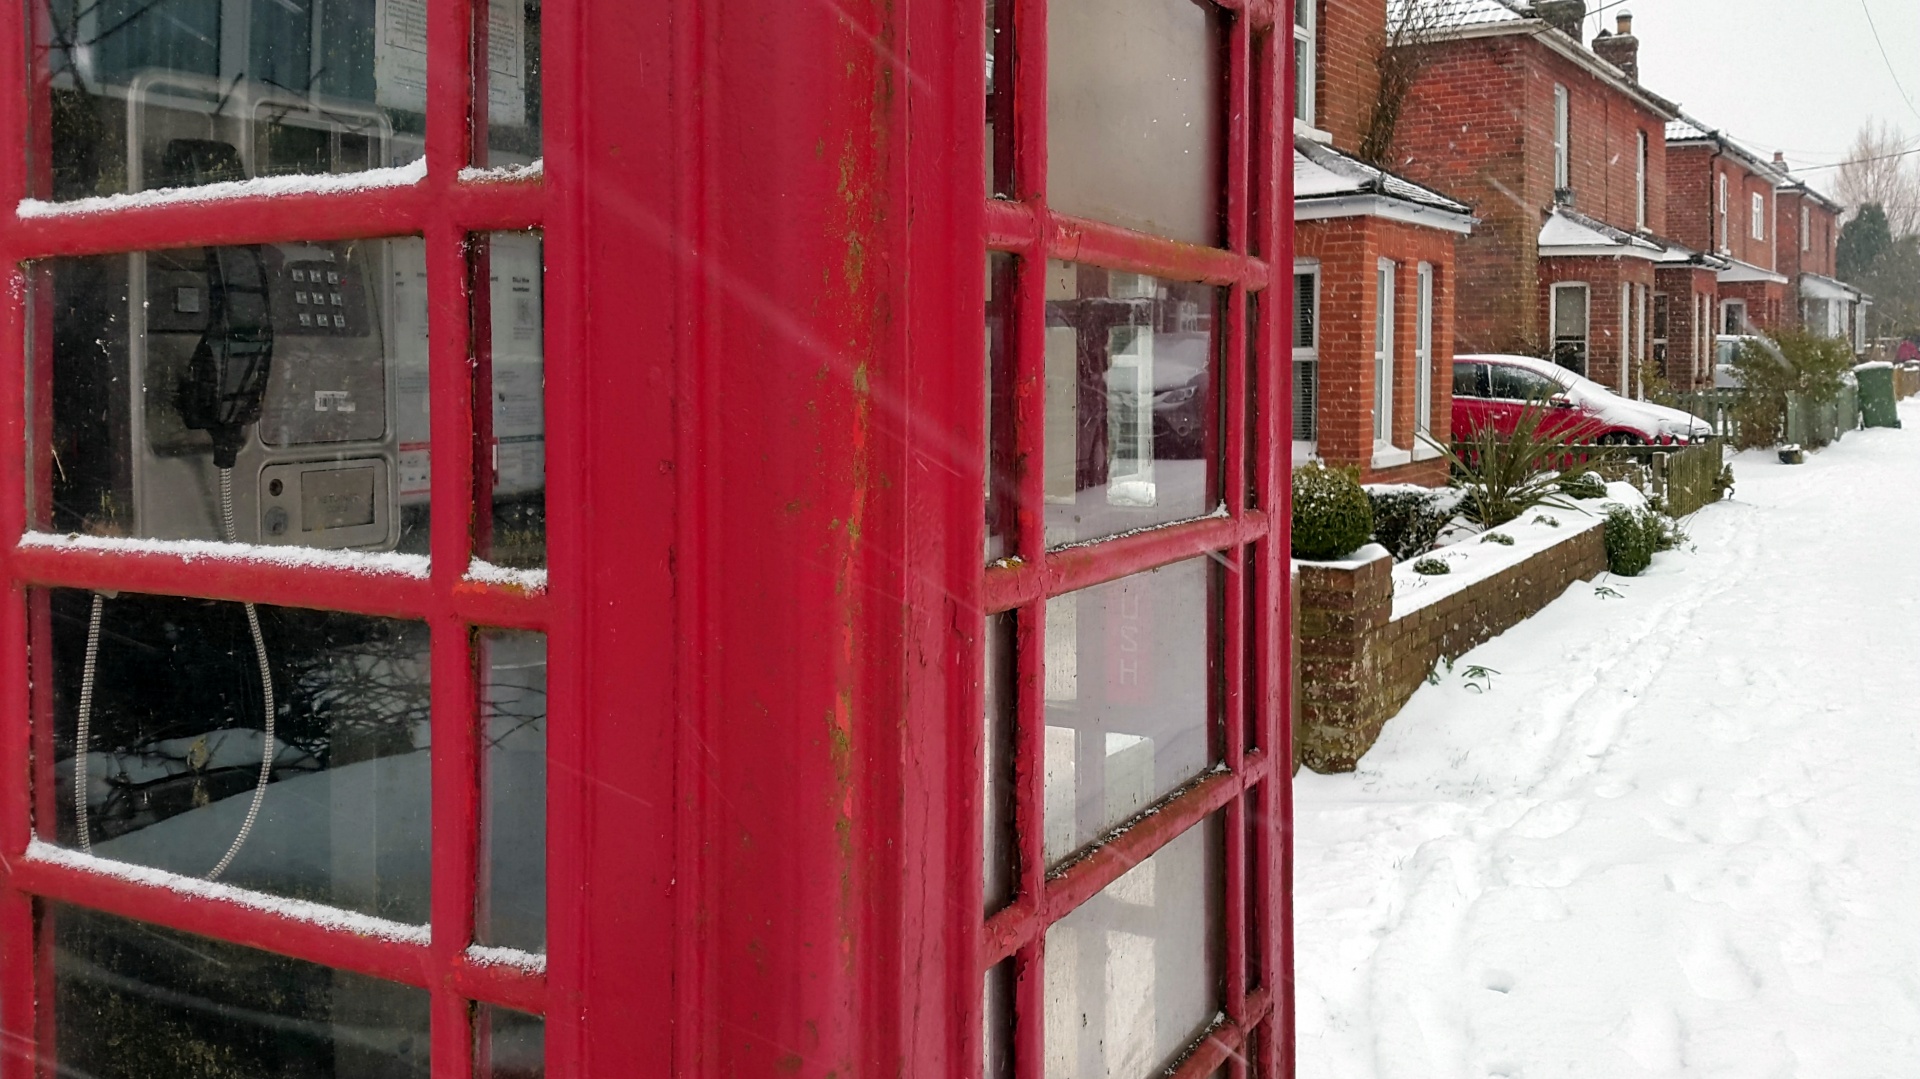 English Phone Box On A Snowy Street